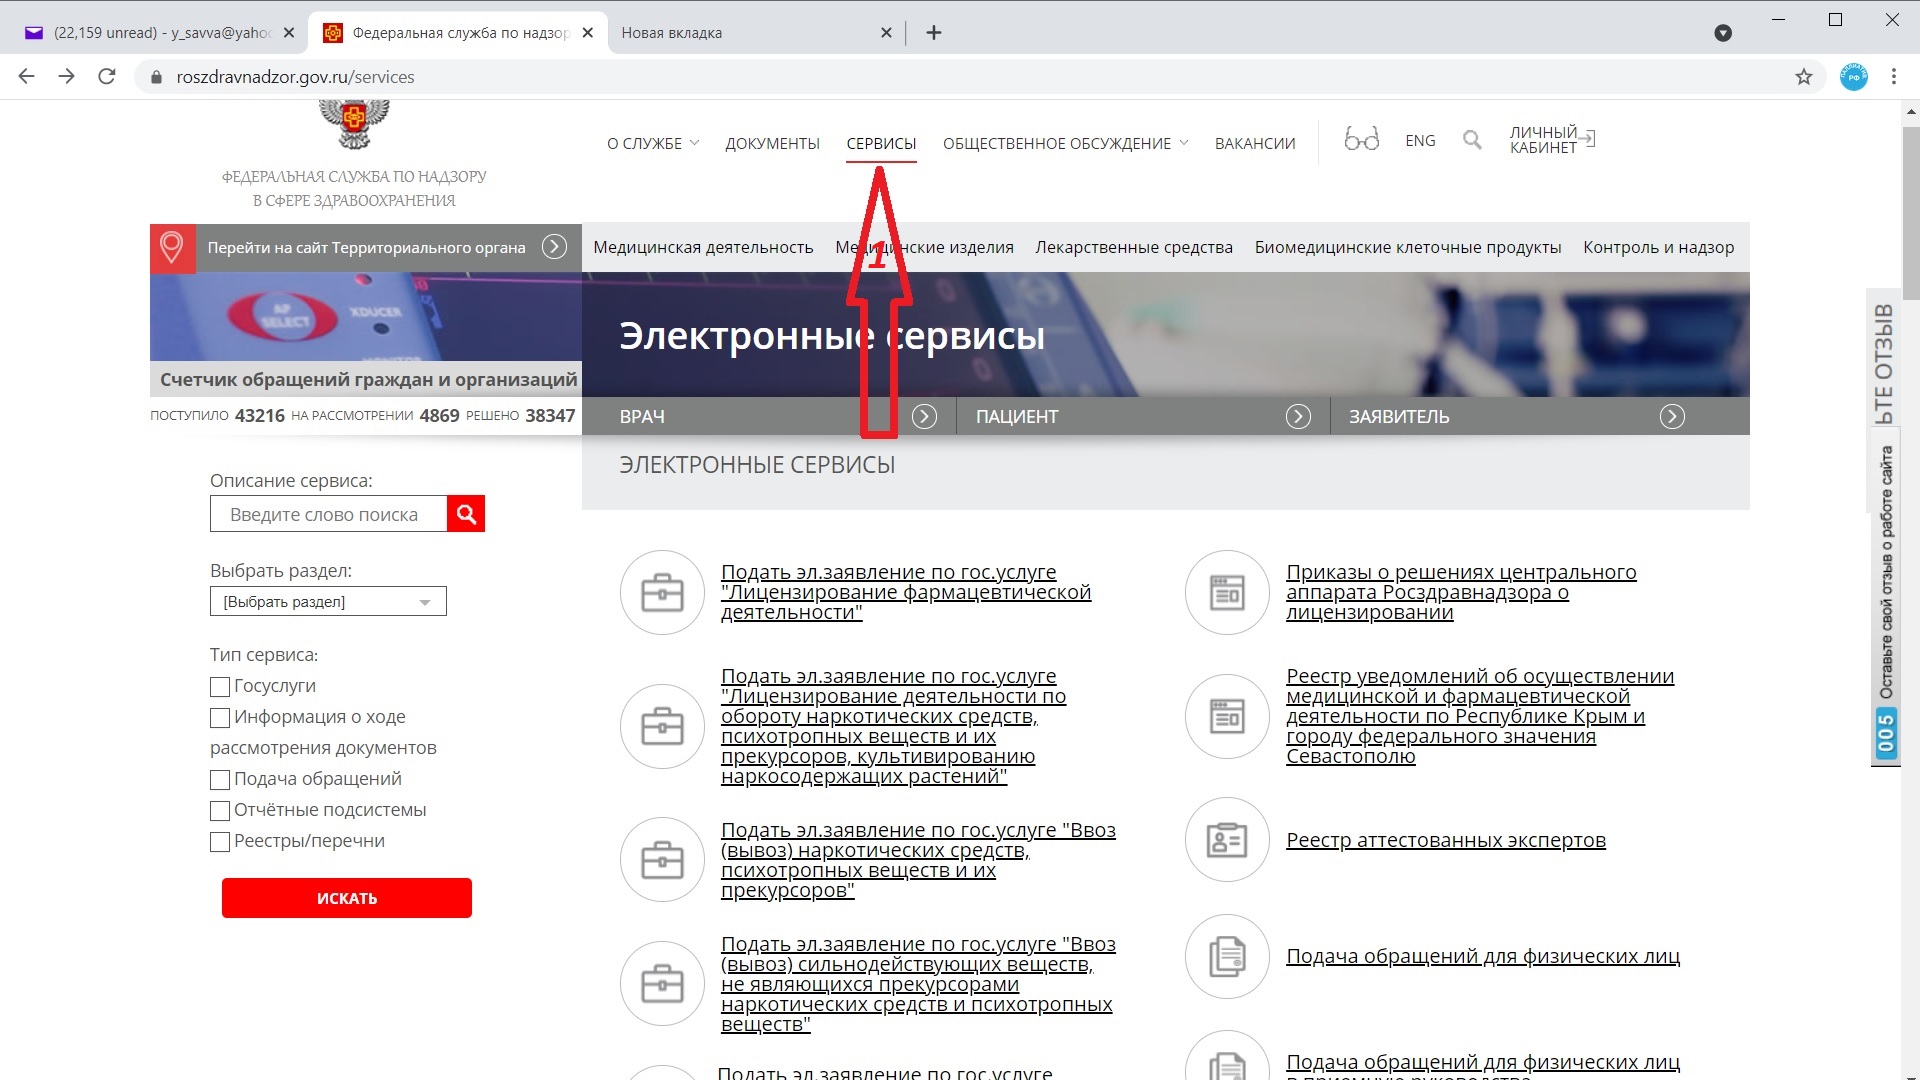 Https roszdravnadzor ru services licenses. Код медицинского изделия. Номенклатурная классификация медицинских изделий по видам.